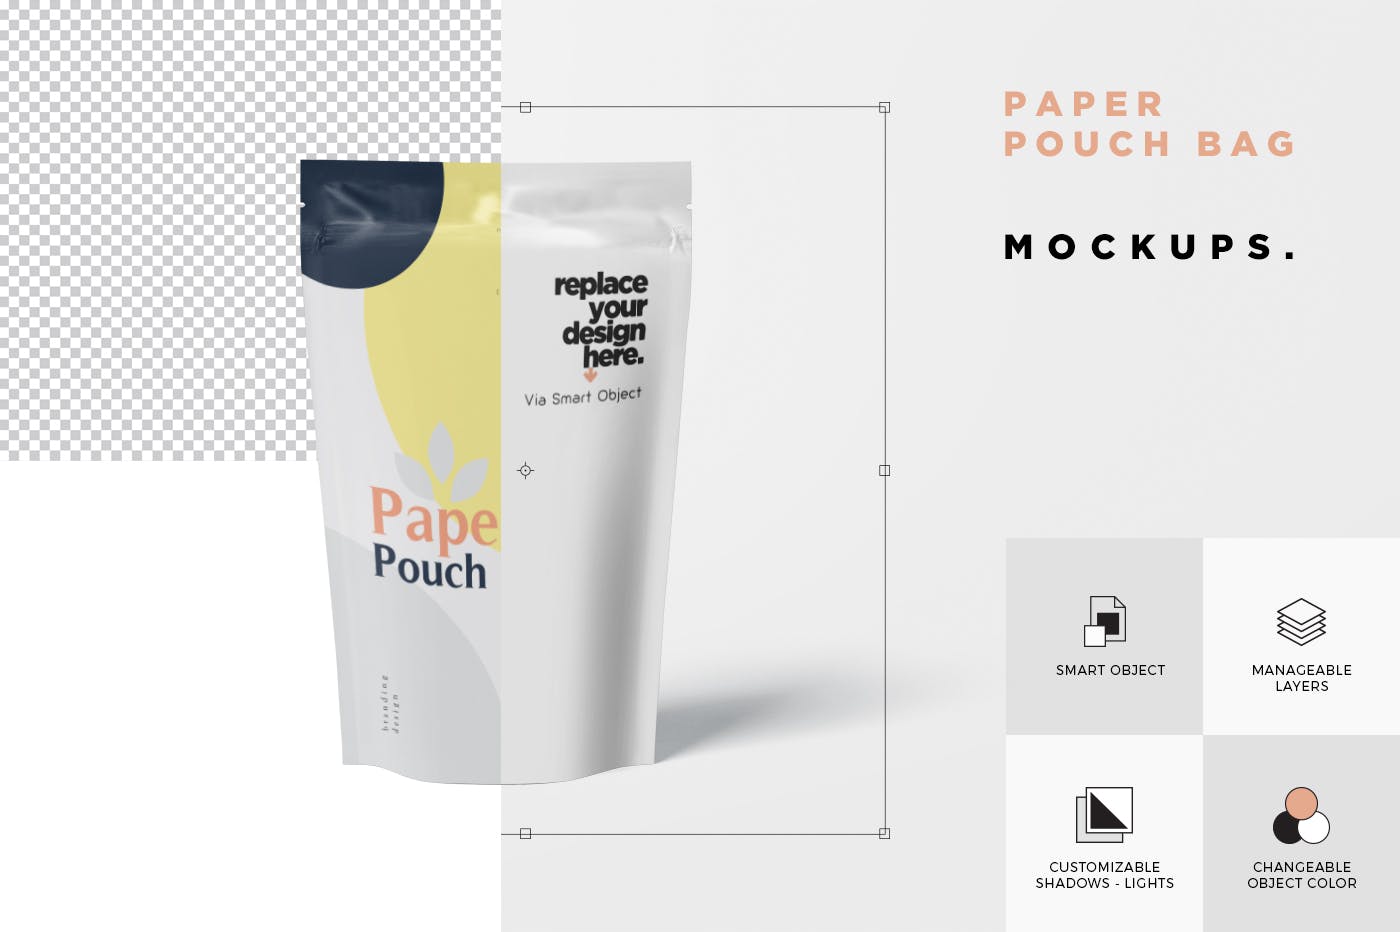 食品自封袋包装设计效果图蚂蚁素材精选 Paper Pouch Bag Mockup – Large Size插图(5)